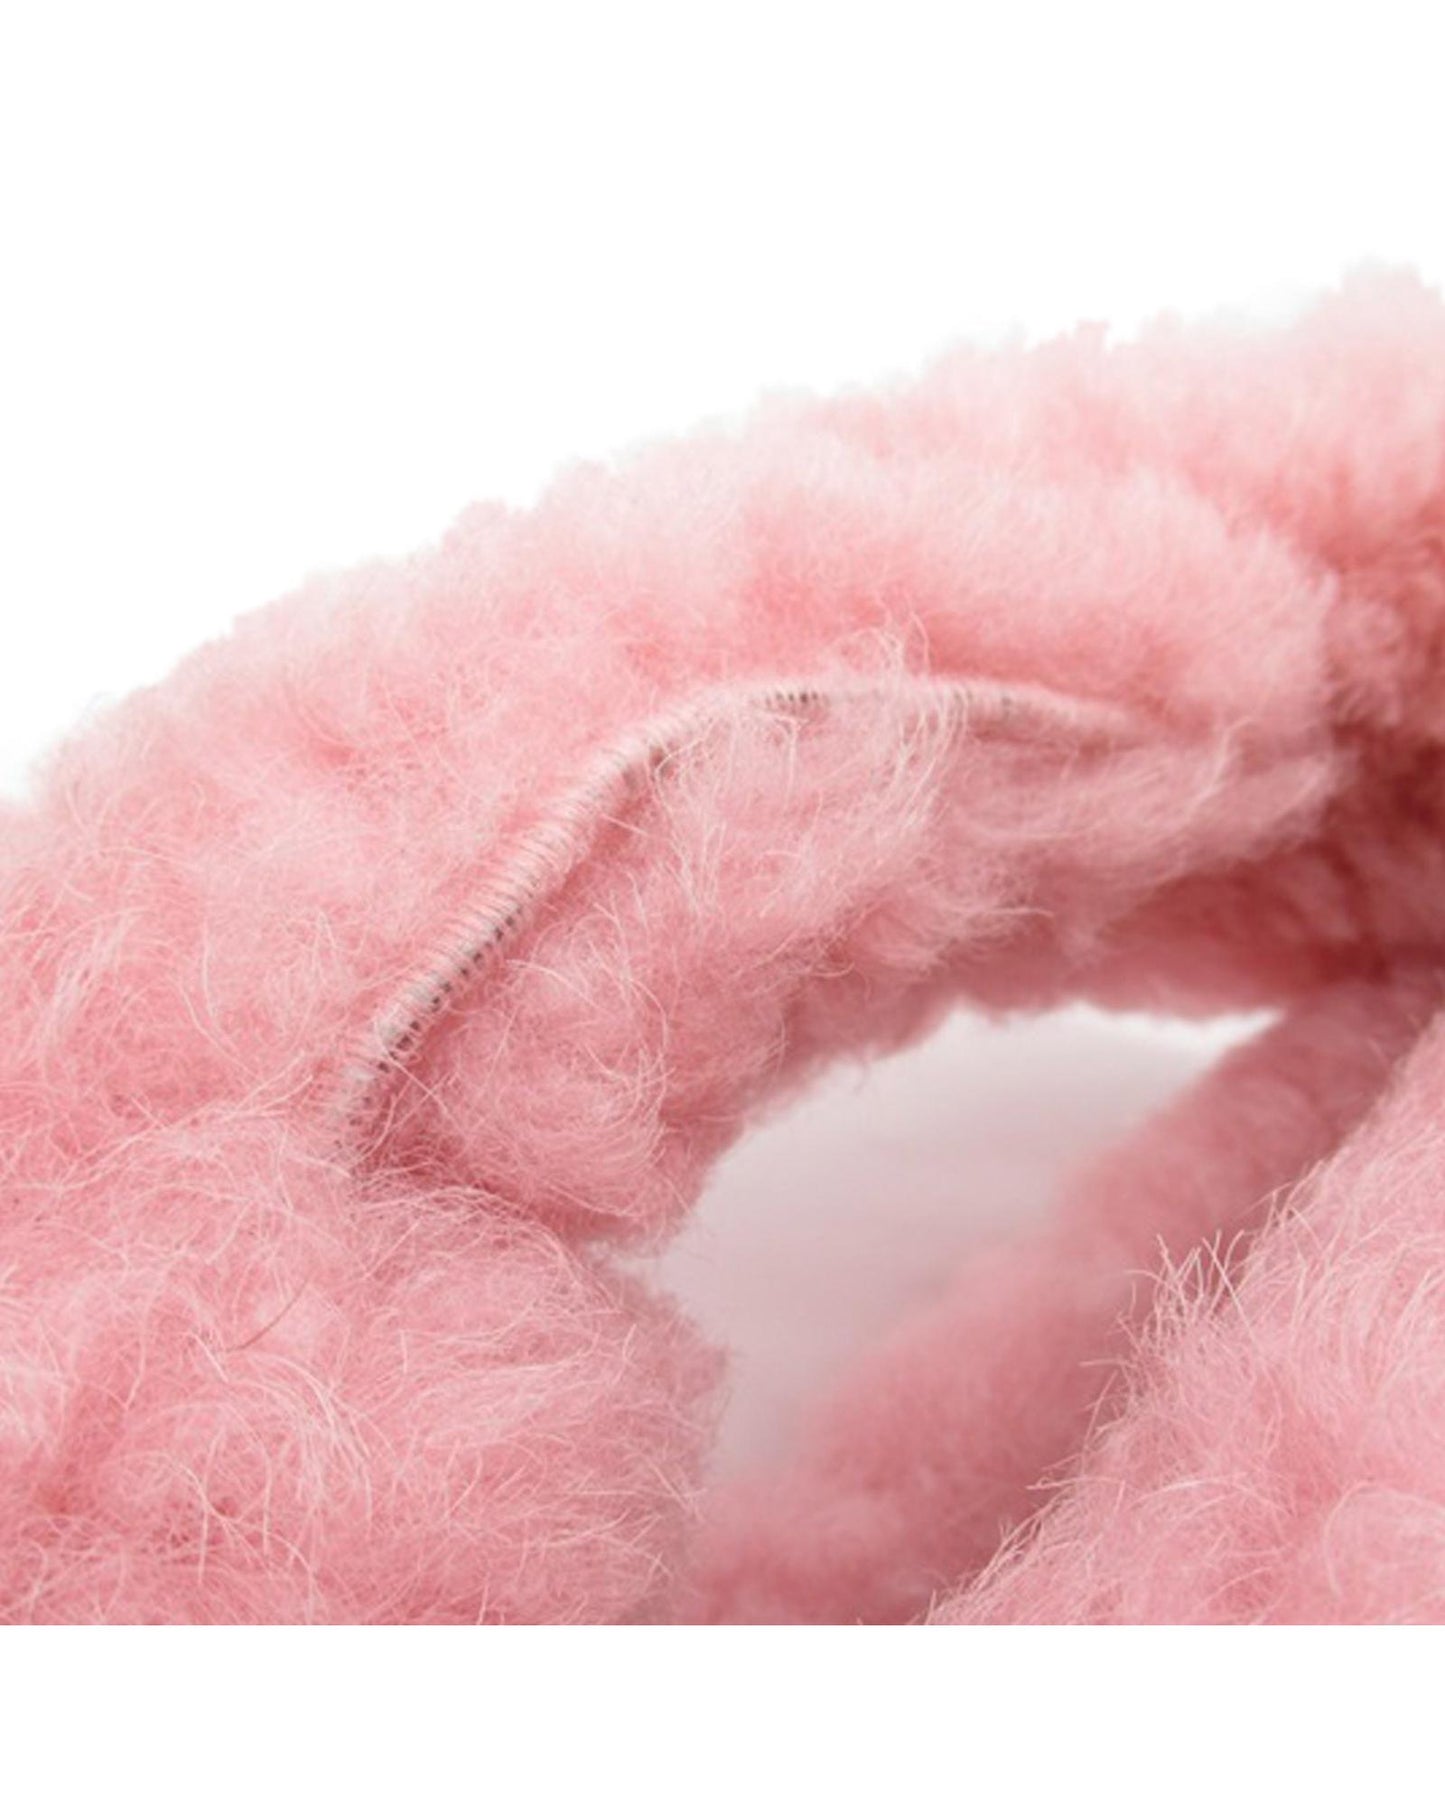 Bottega Veneta Women's Shearling Knotted Mini Zipper Bag in Pink